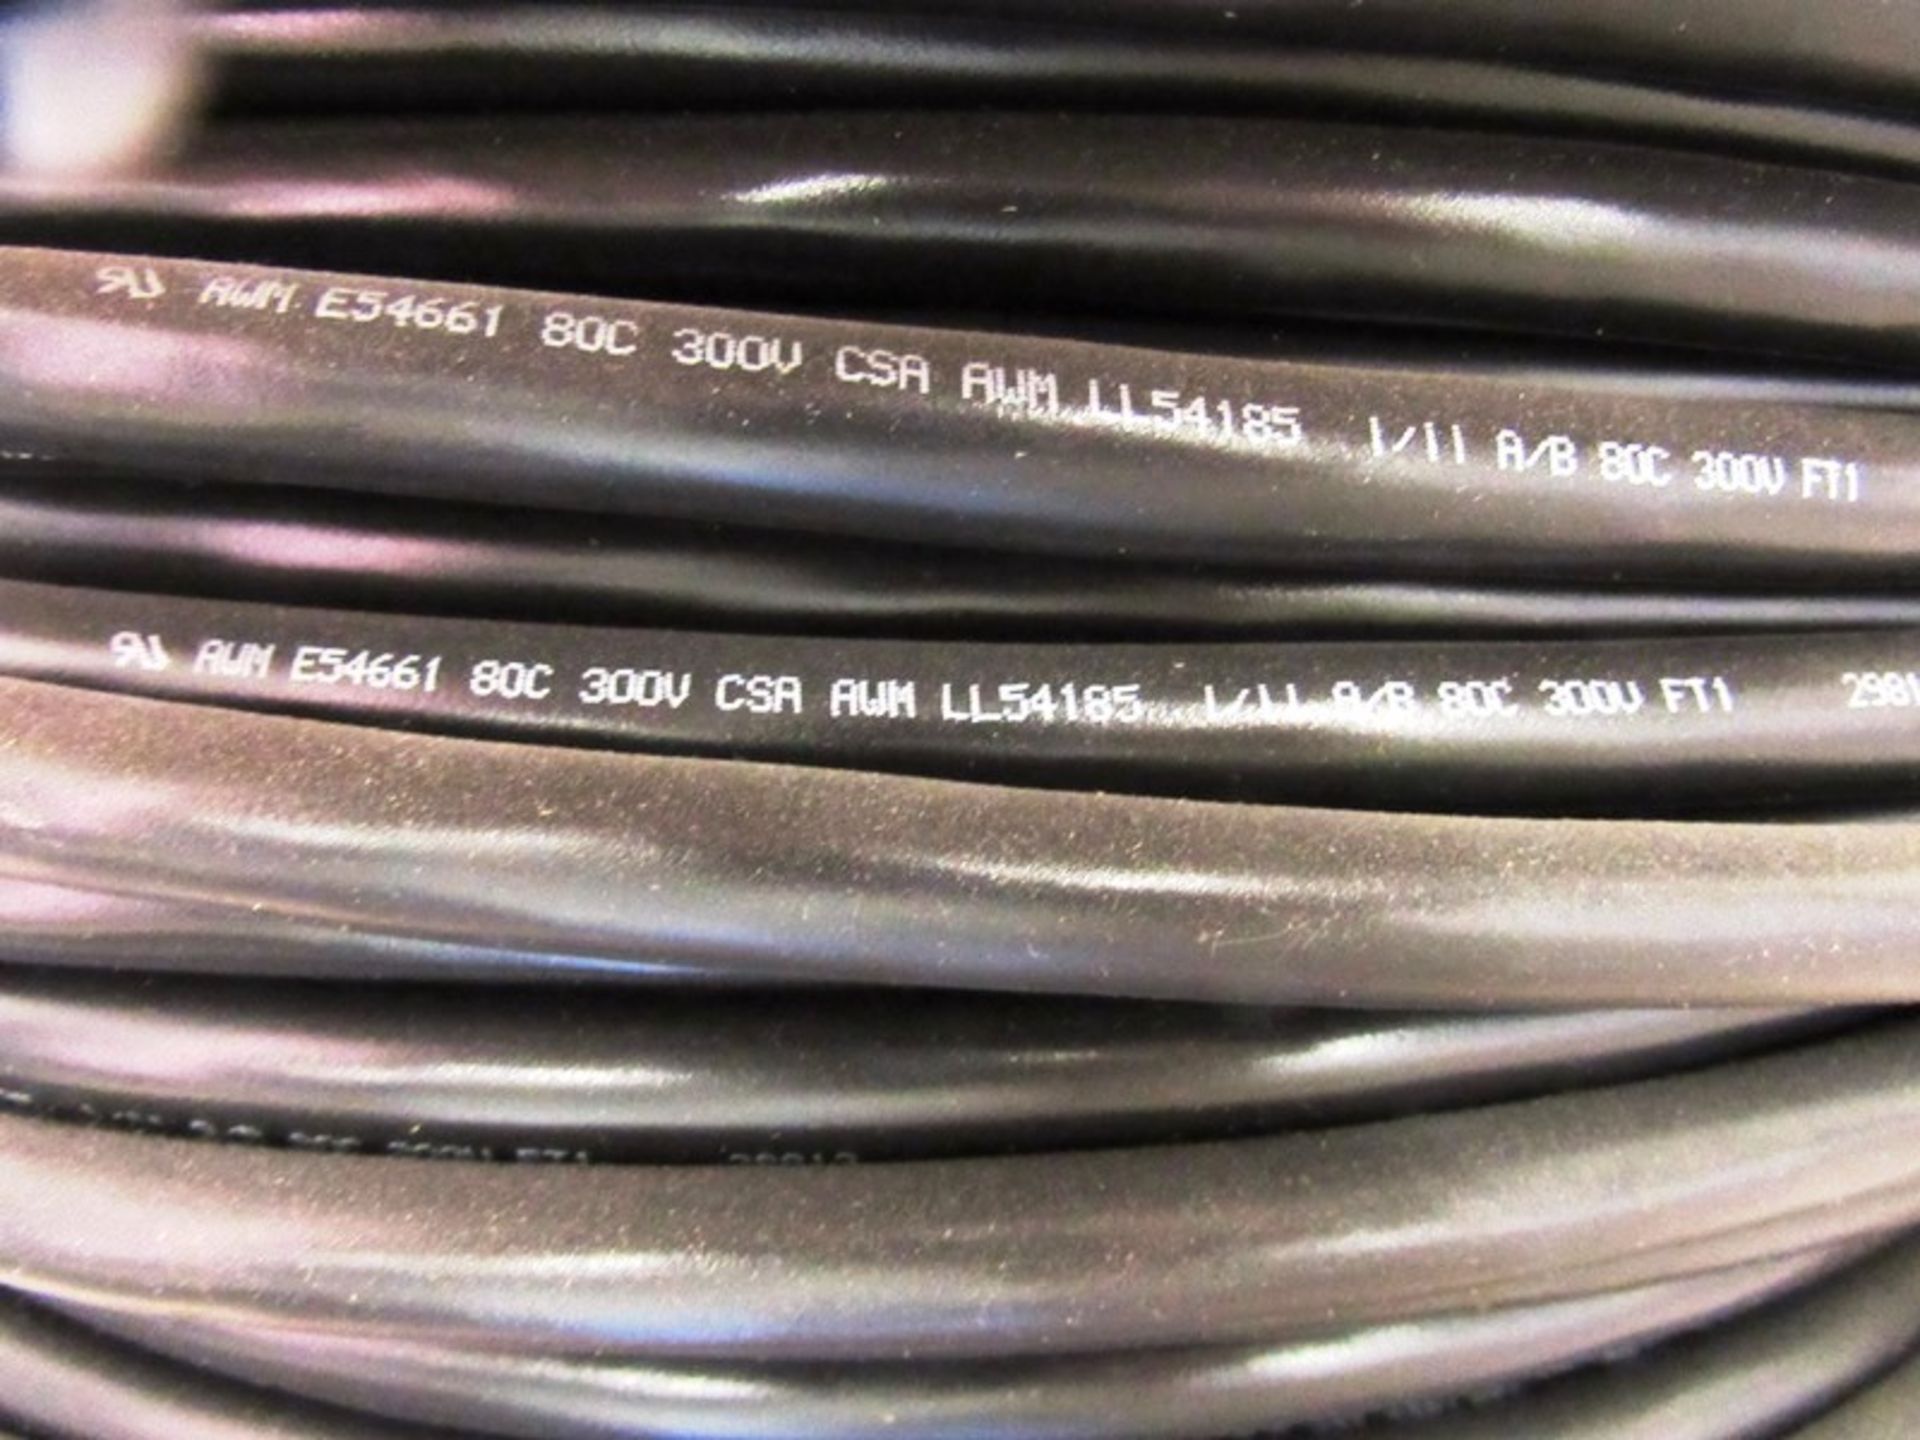 Electrical Wire (1) Roll AWM E54661 80C 300V CSA AWM LL54185 1/11 AB 80C 300V FTI - 6 Wire, (1) Roll - Image 2 of 8